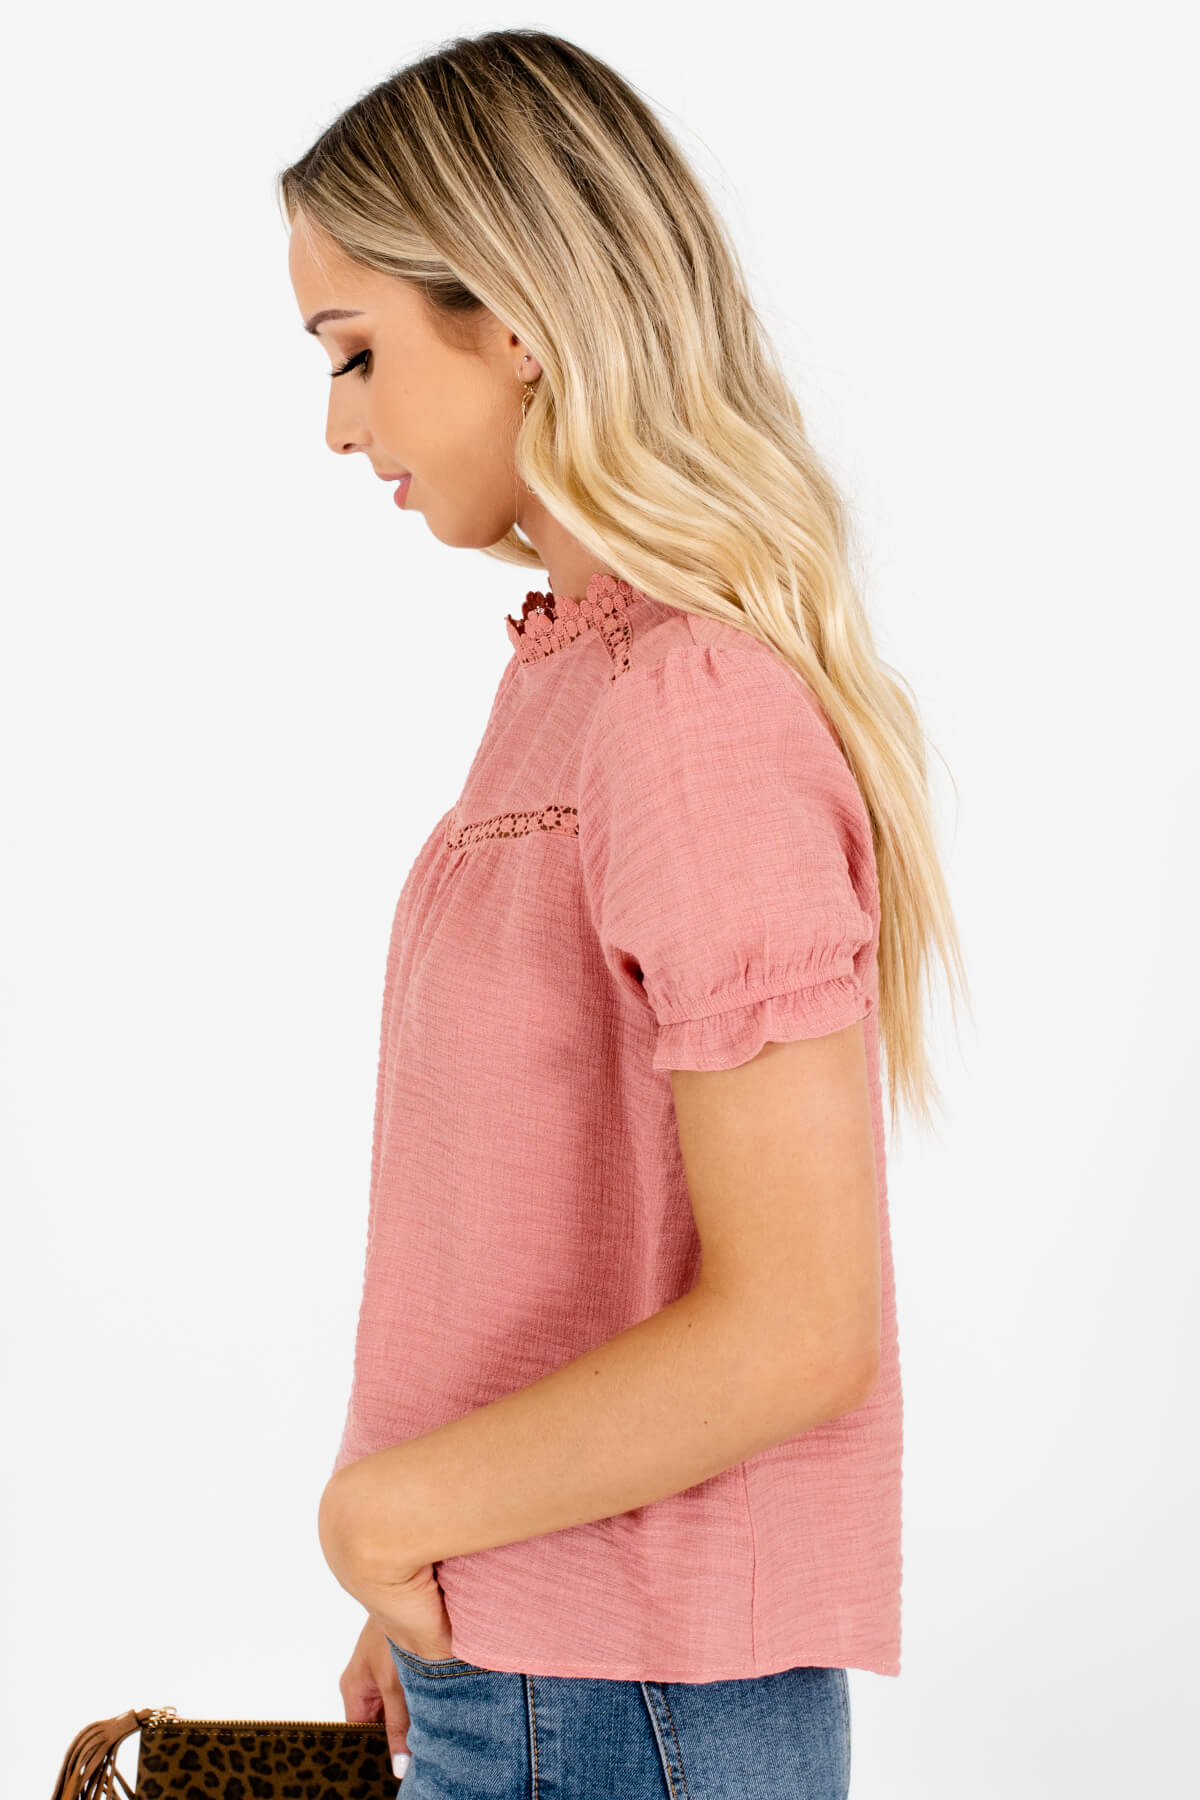 Women's Pink Elastic Ruffle Sleeve Boutique Blouse